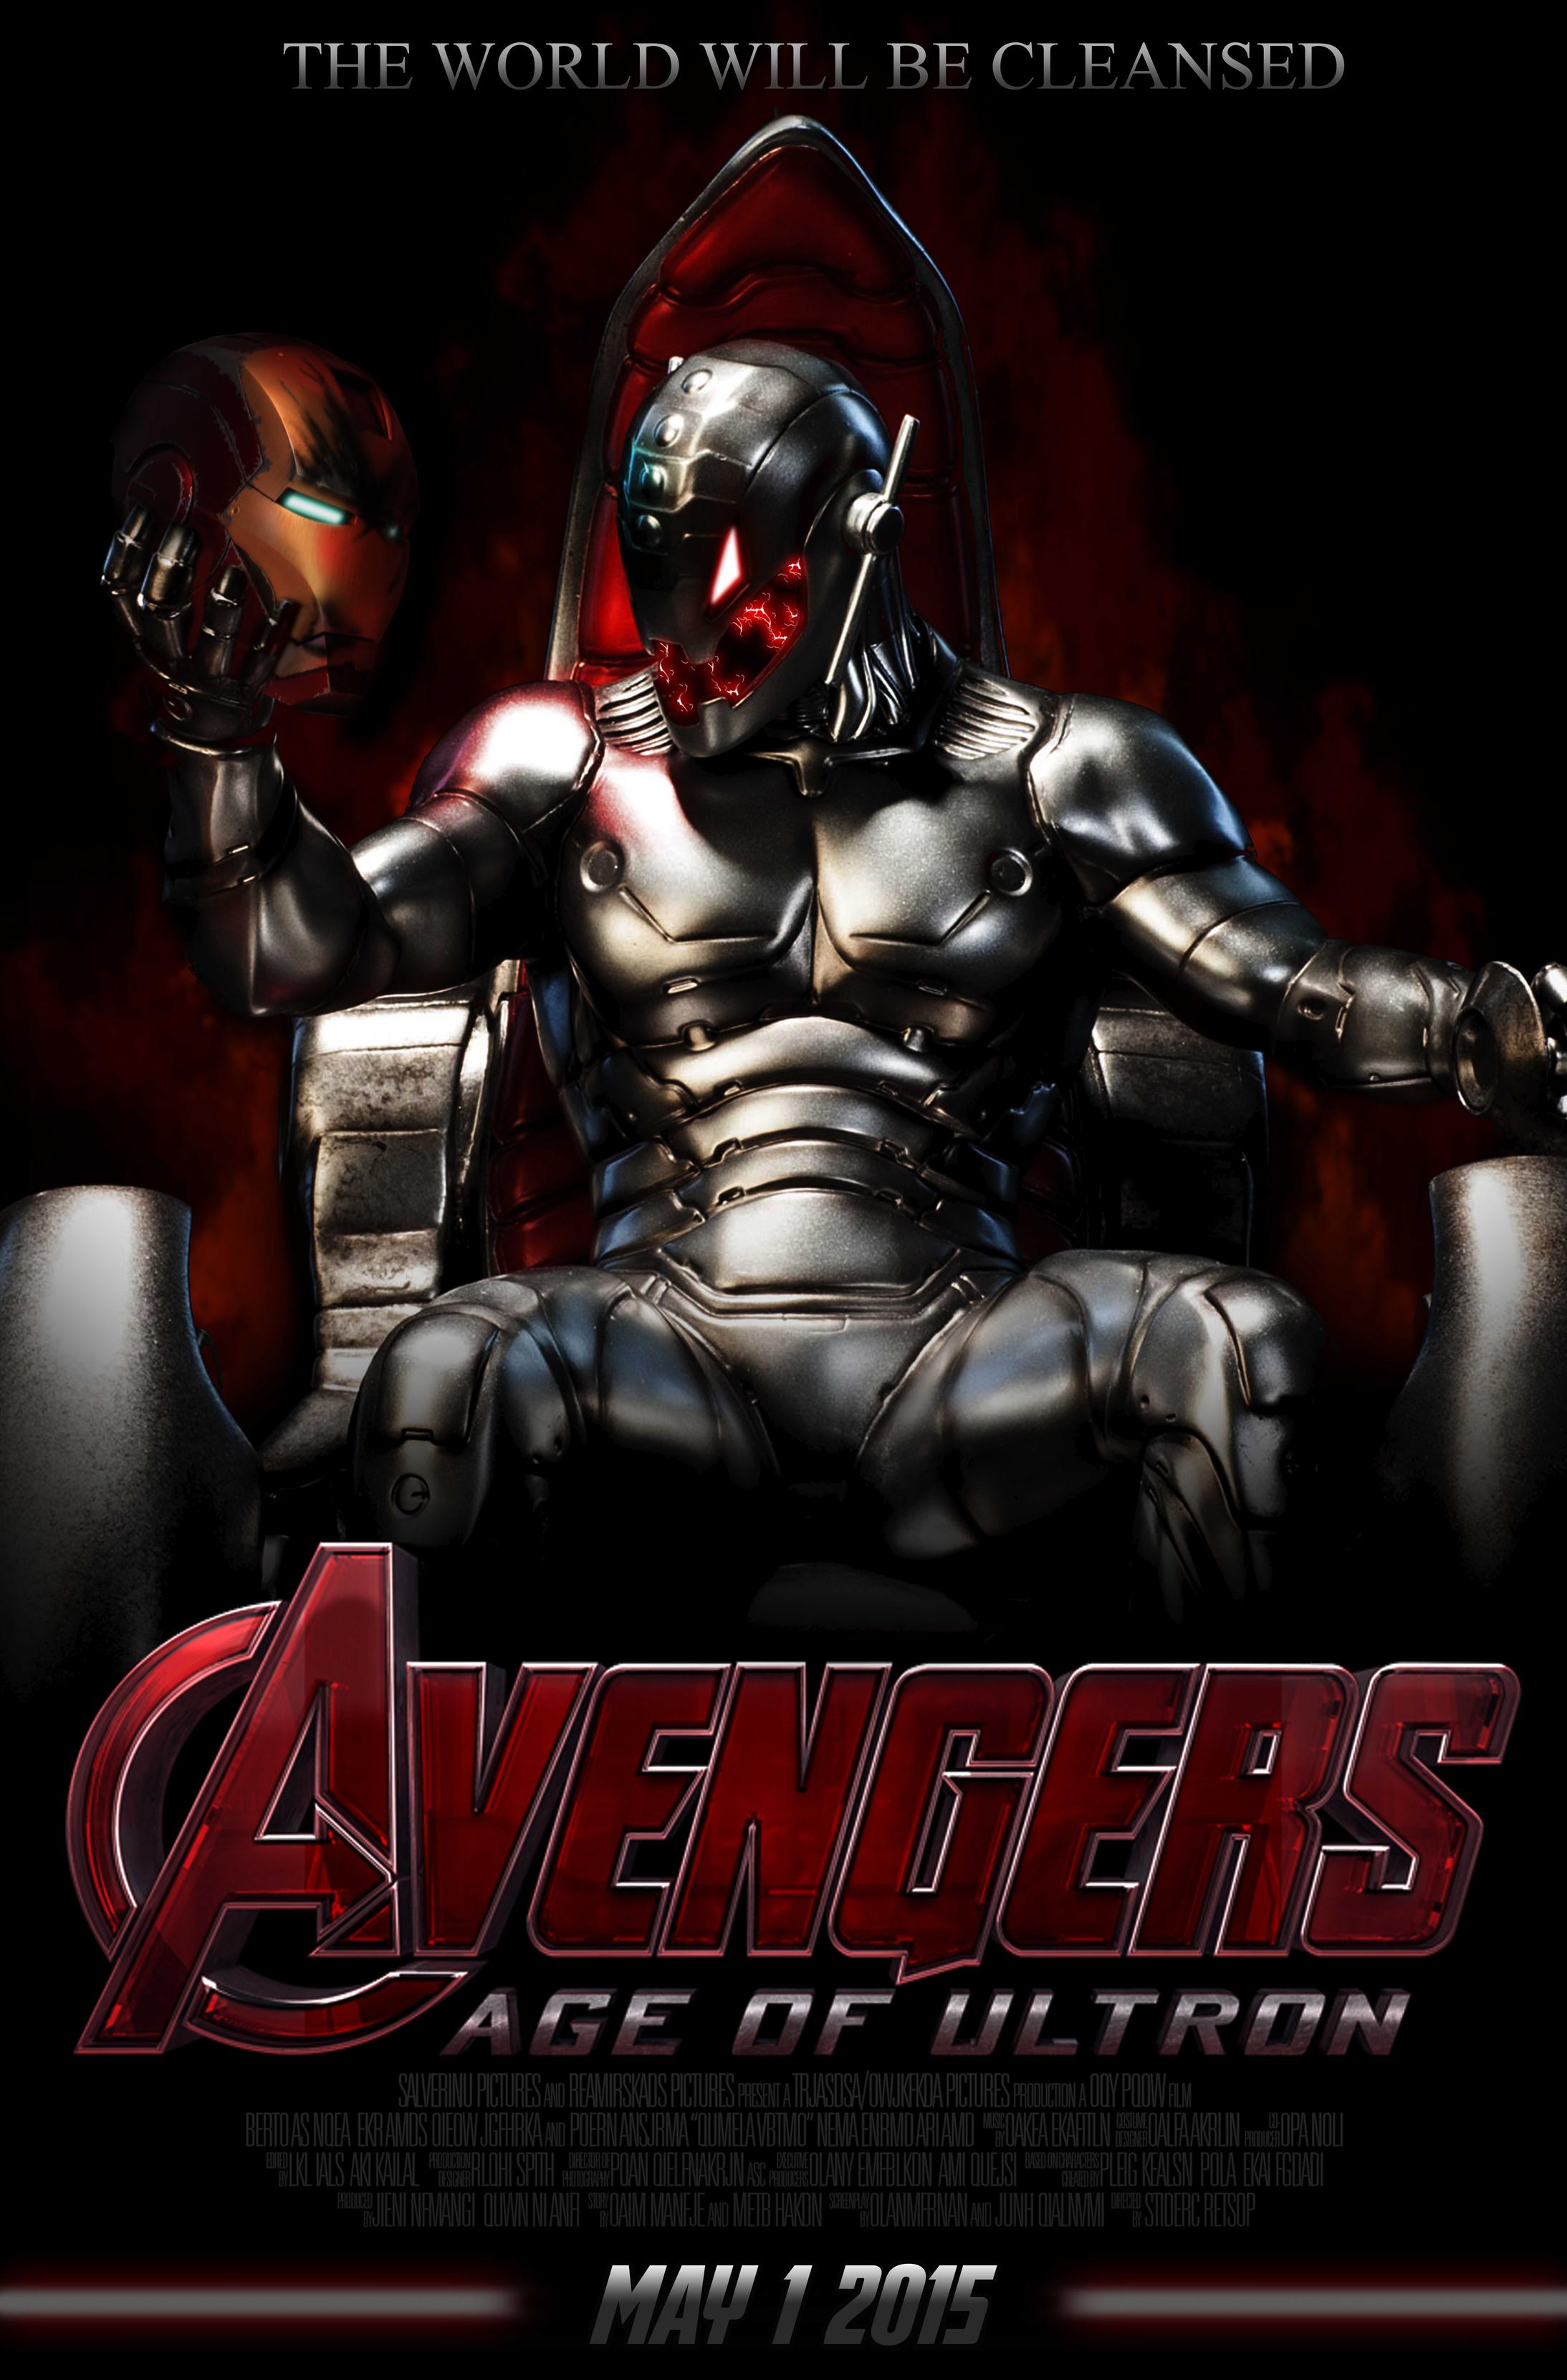 Marvels Avengers: Age of Ultron - Trailer 3 - YouTube